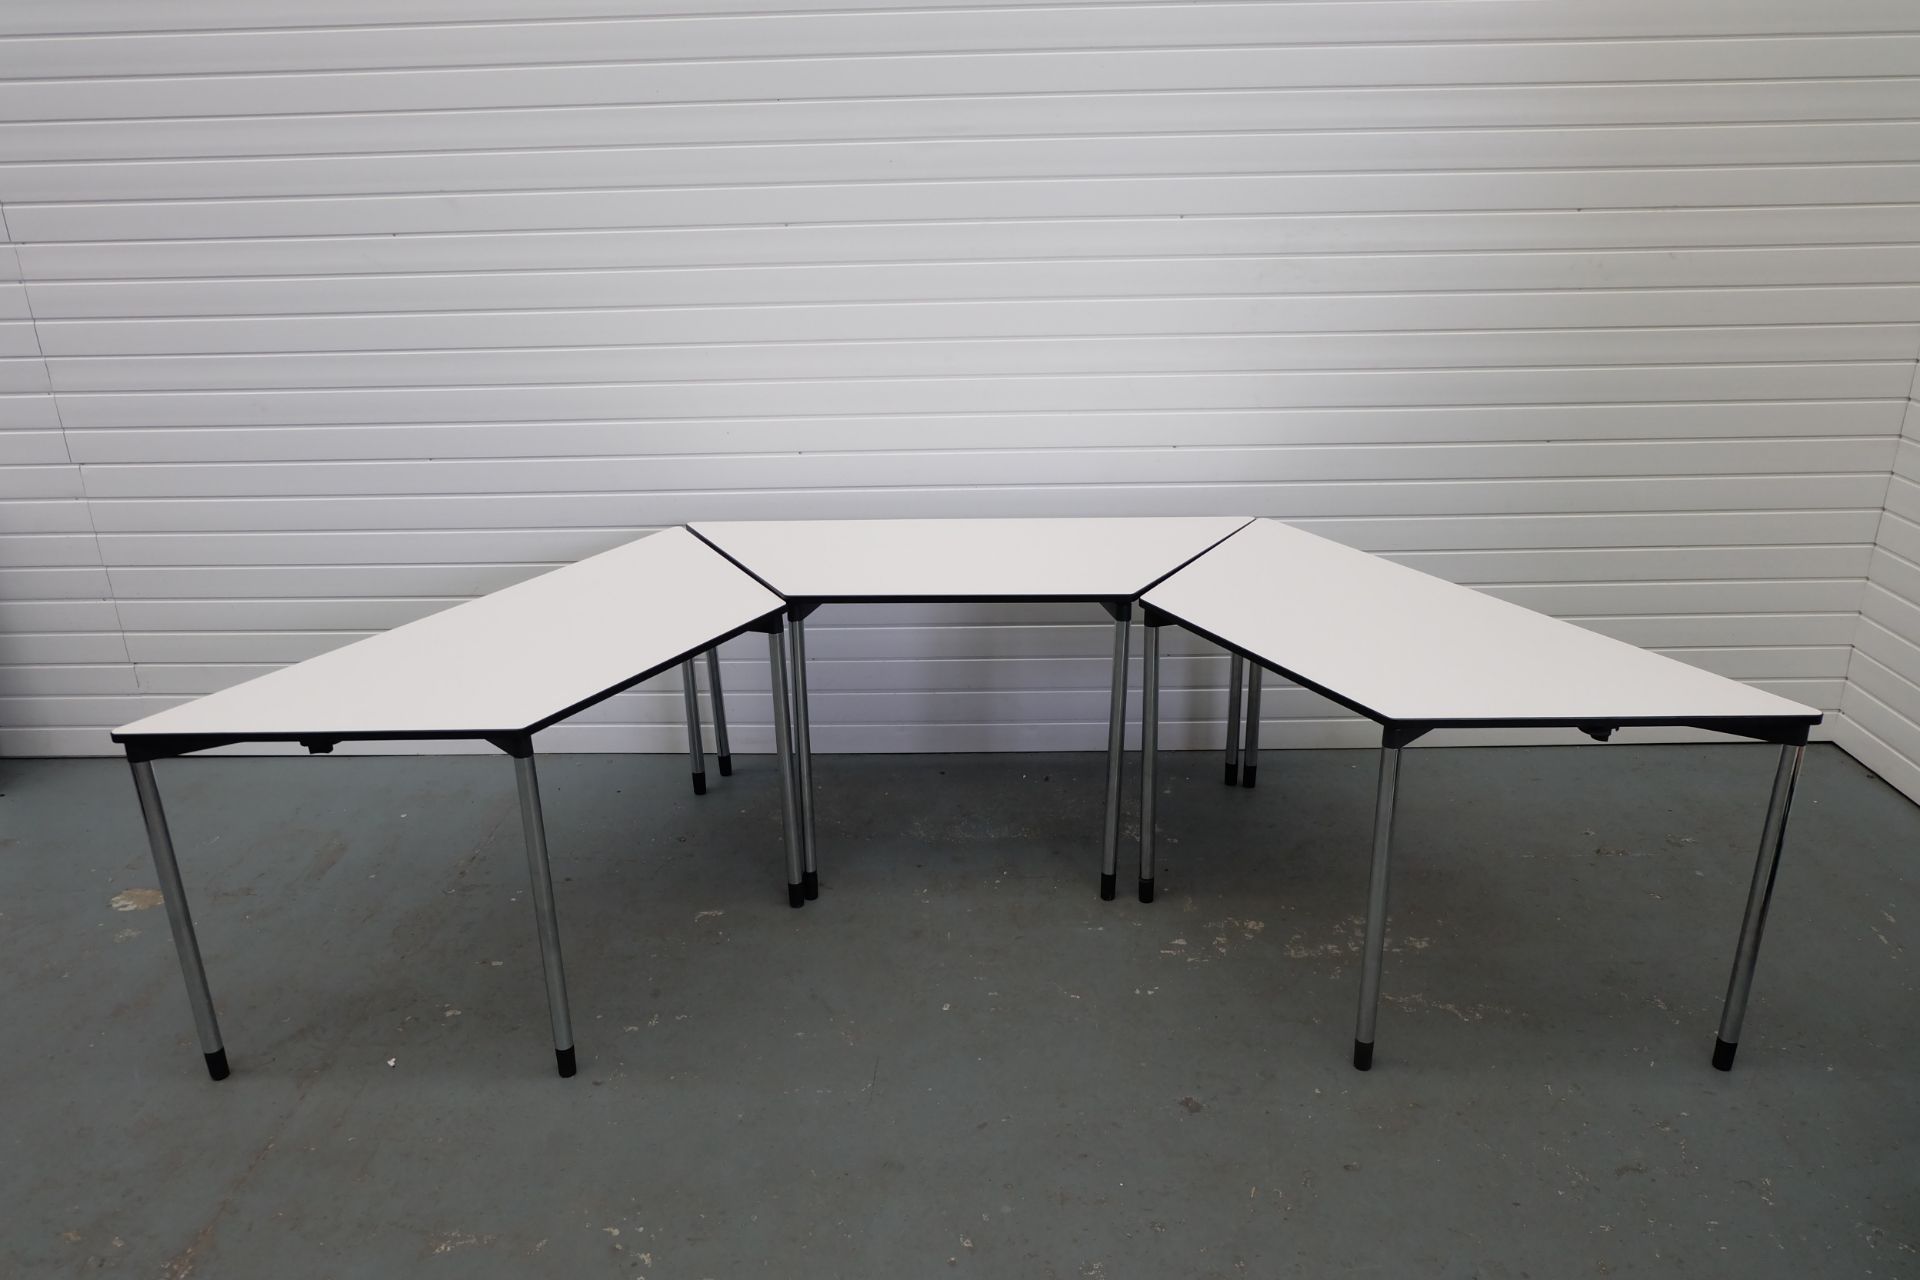 3 x Trapeziod Shape Desks With Metal Legs. Size 1470mm x 650mm x 750mm High.